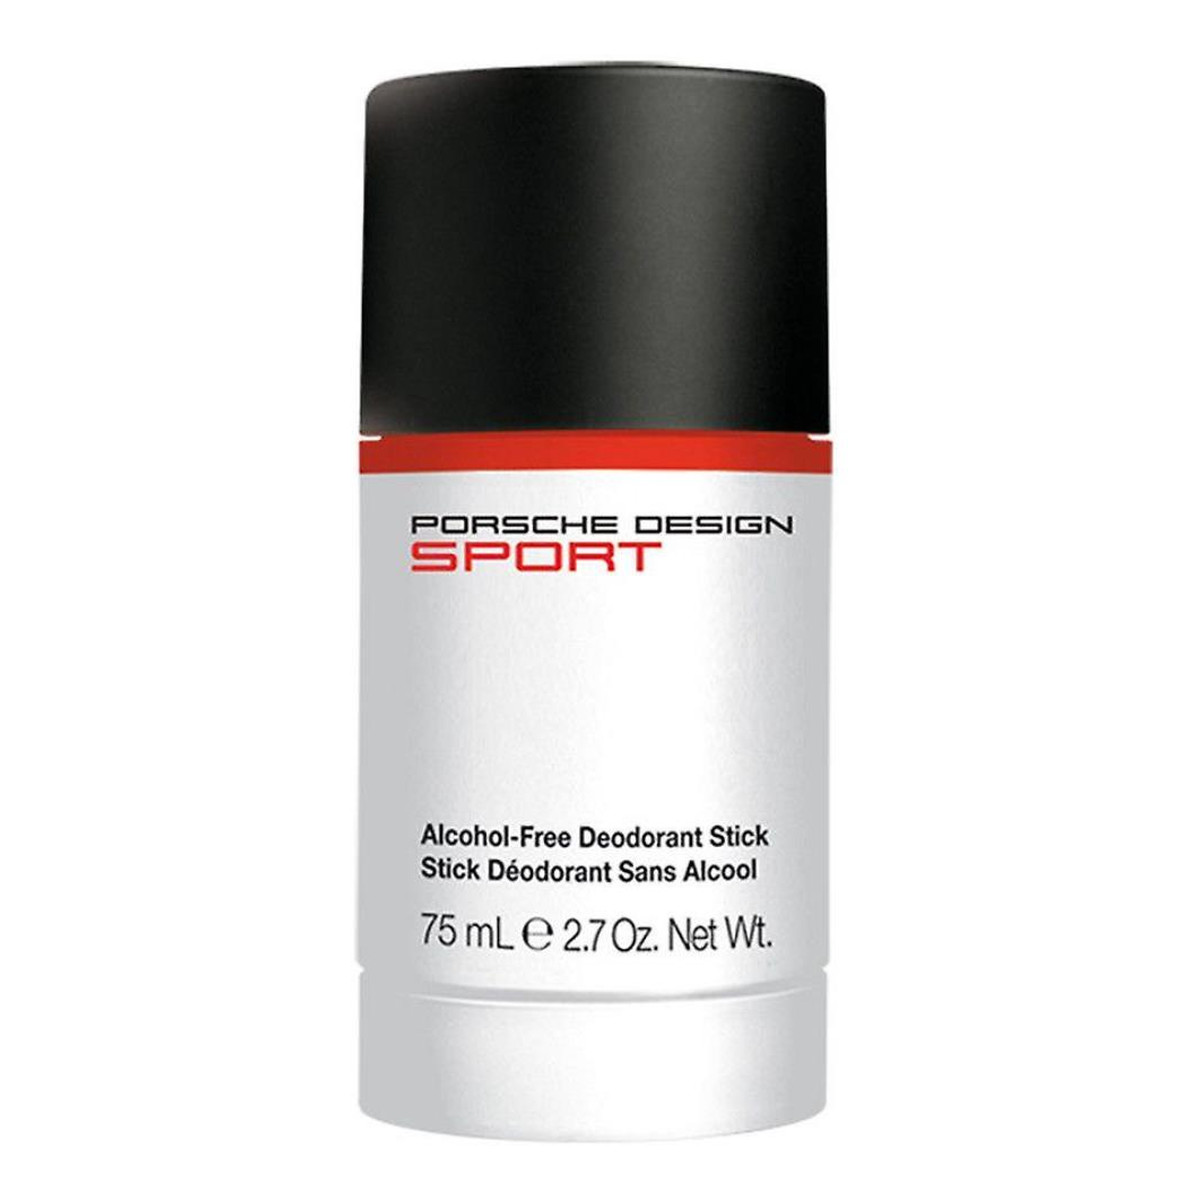 Porsche Design Sport For Men dezodorant sztyft 75ml